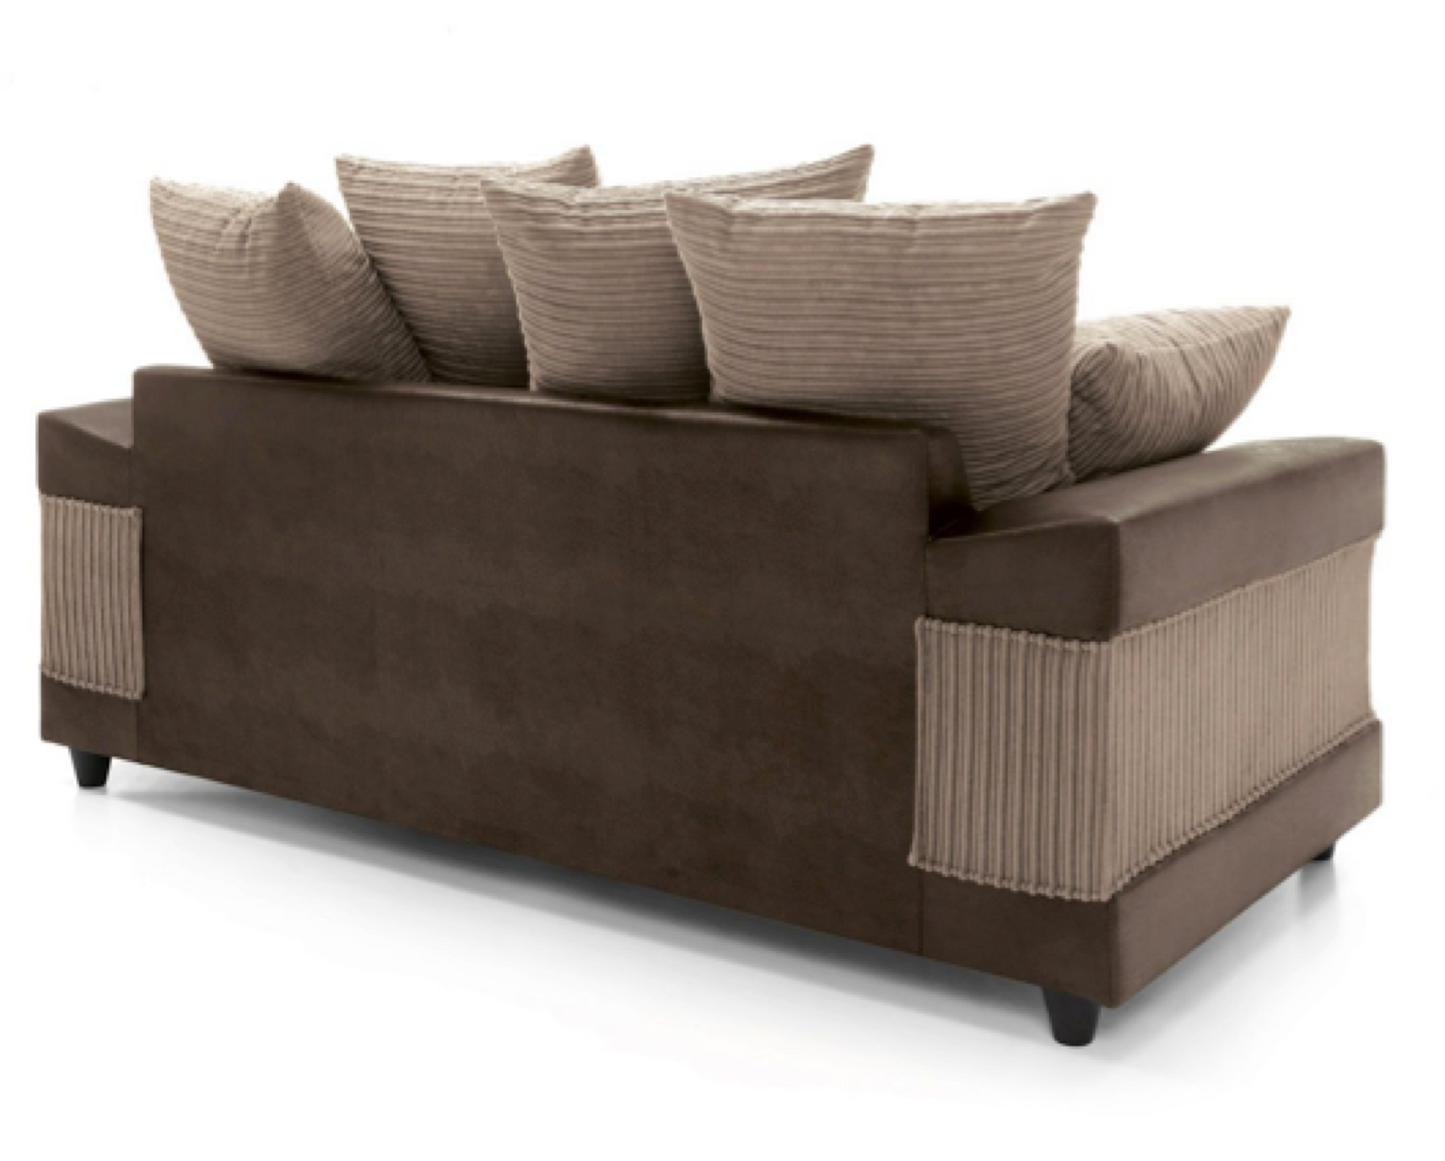 Dulcie 3 Seater Sofa - Brown & Beige